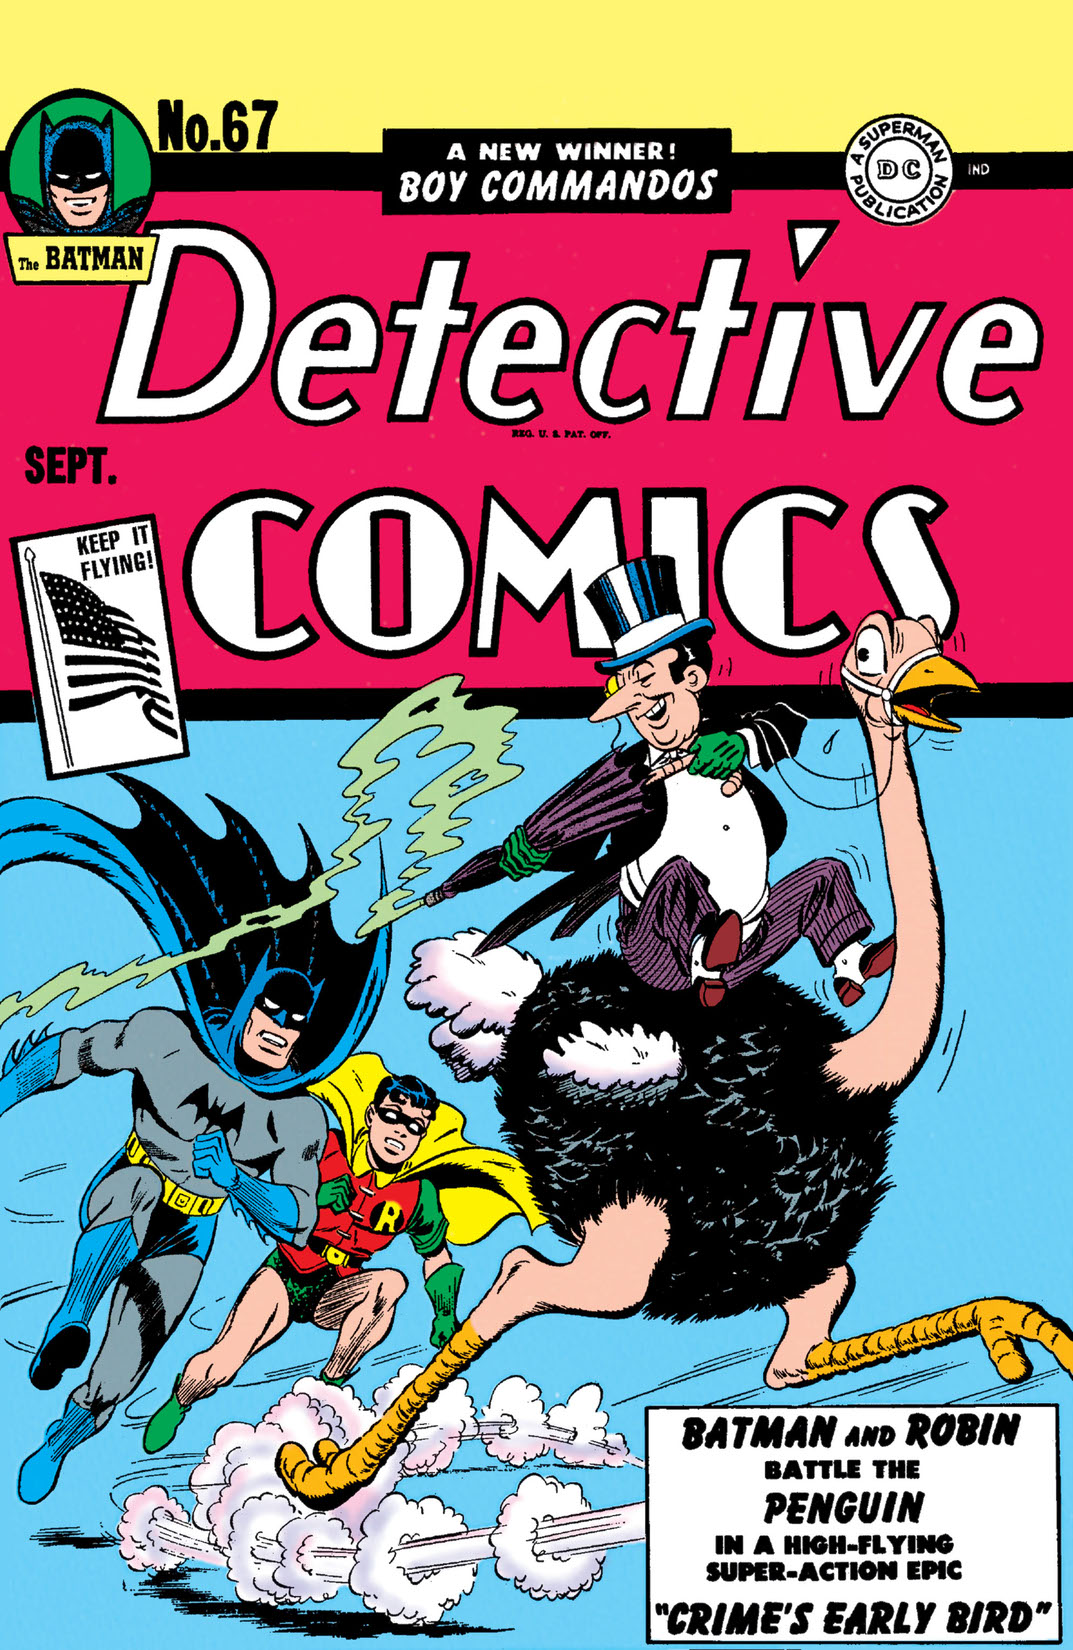 Detective Comics (1942-) #67 preview images